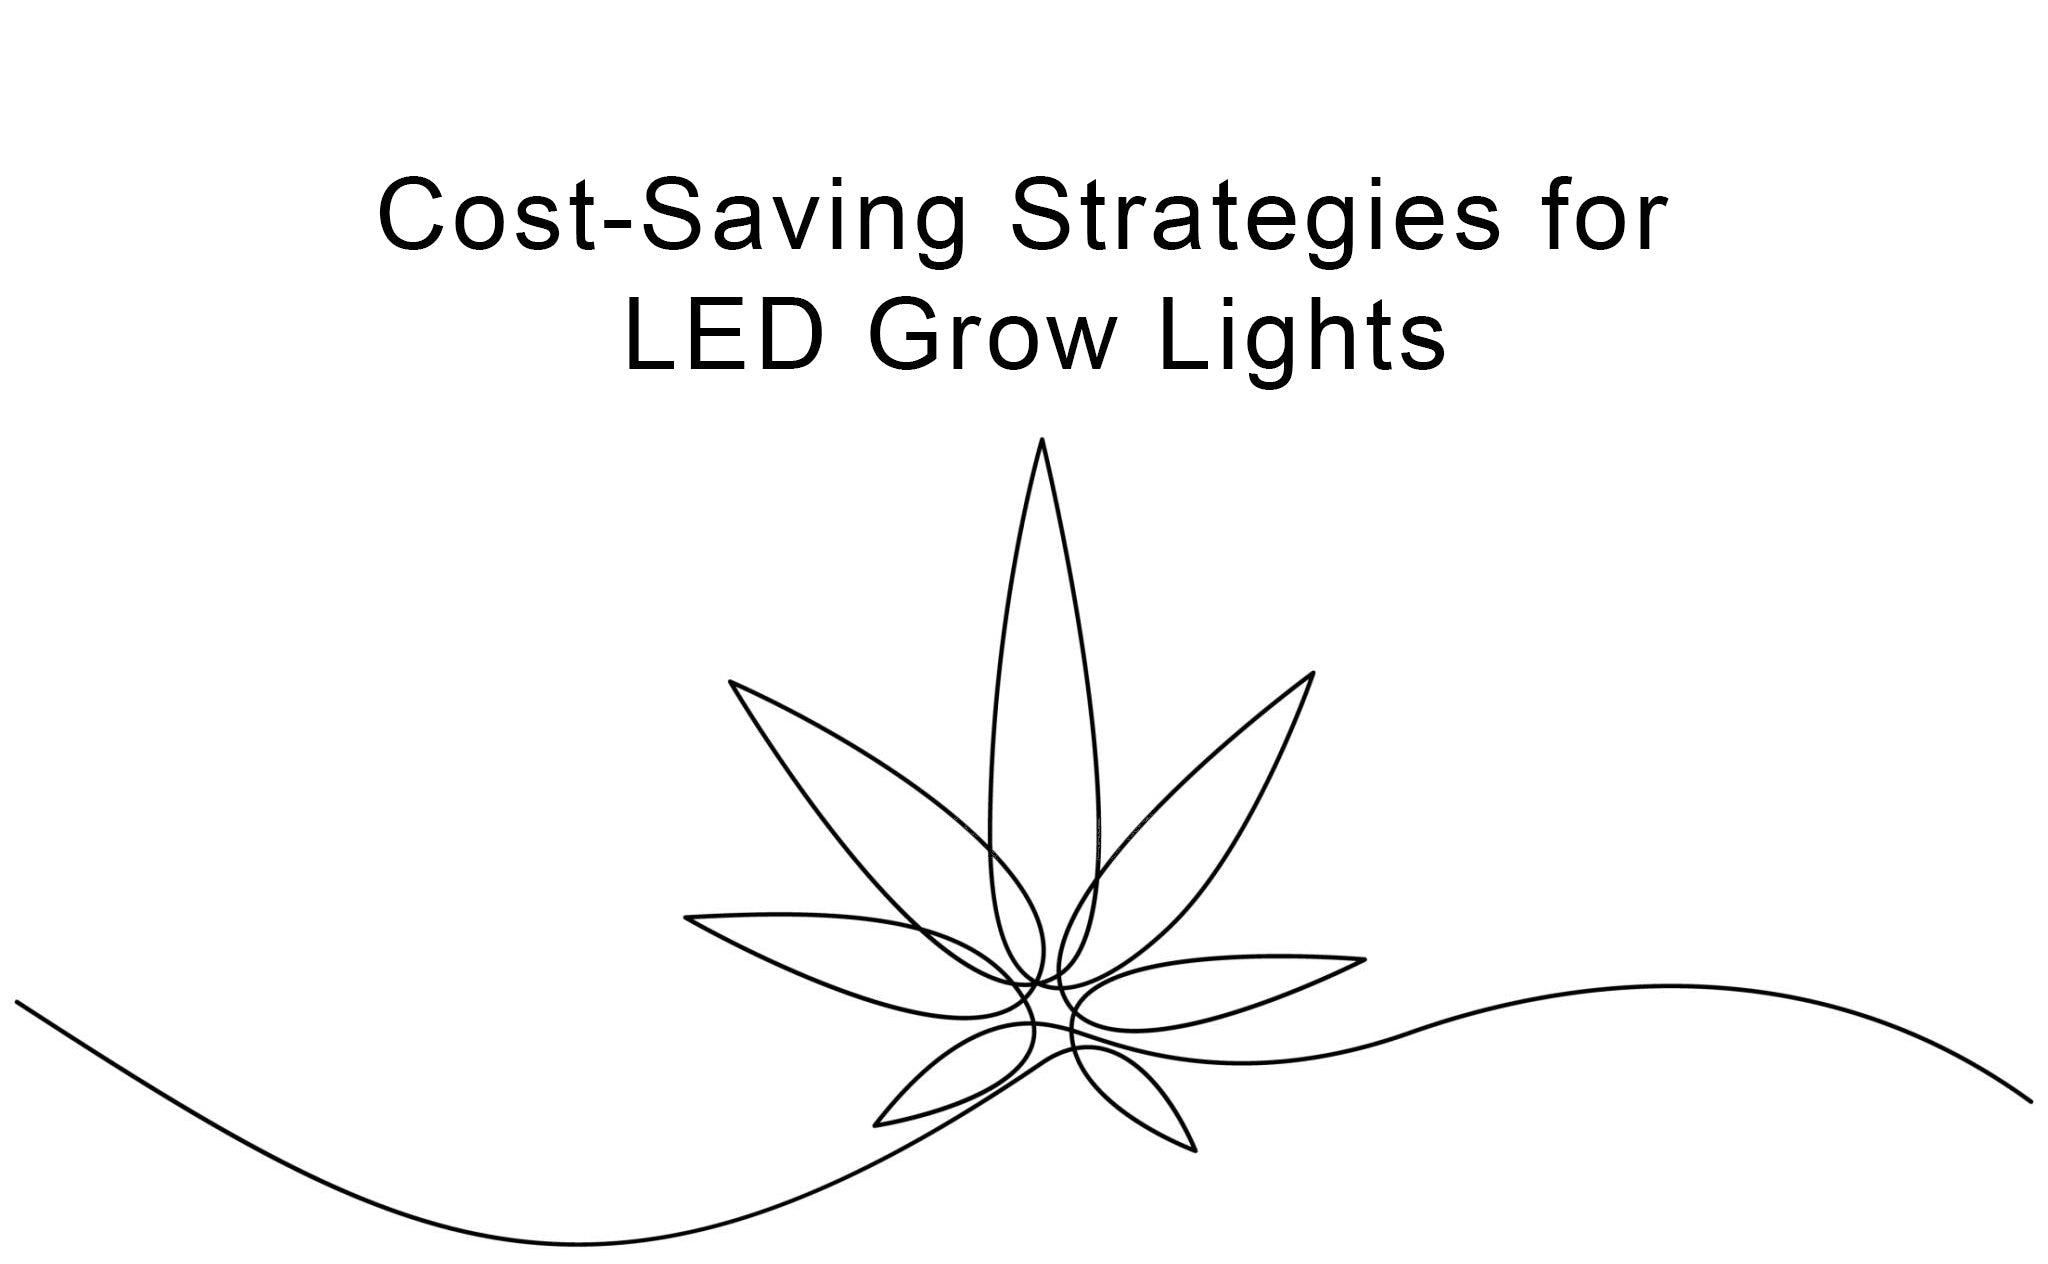 Cost-Saving Strategies for LED Grow Lights